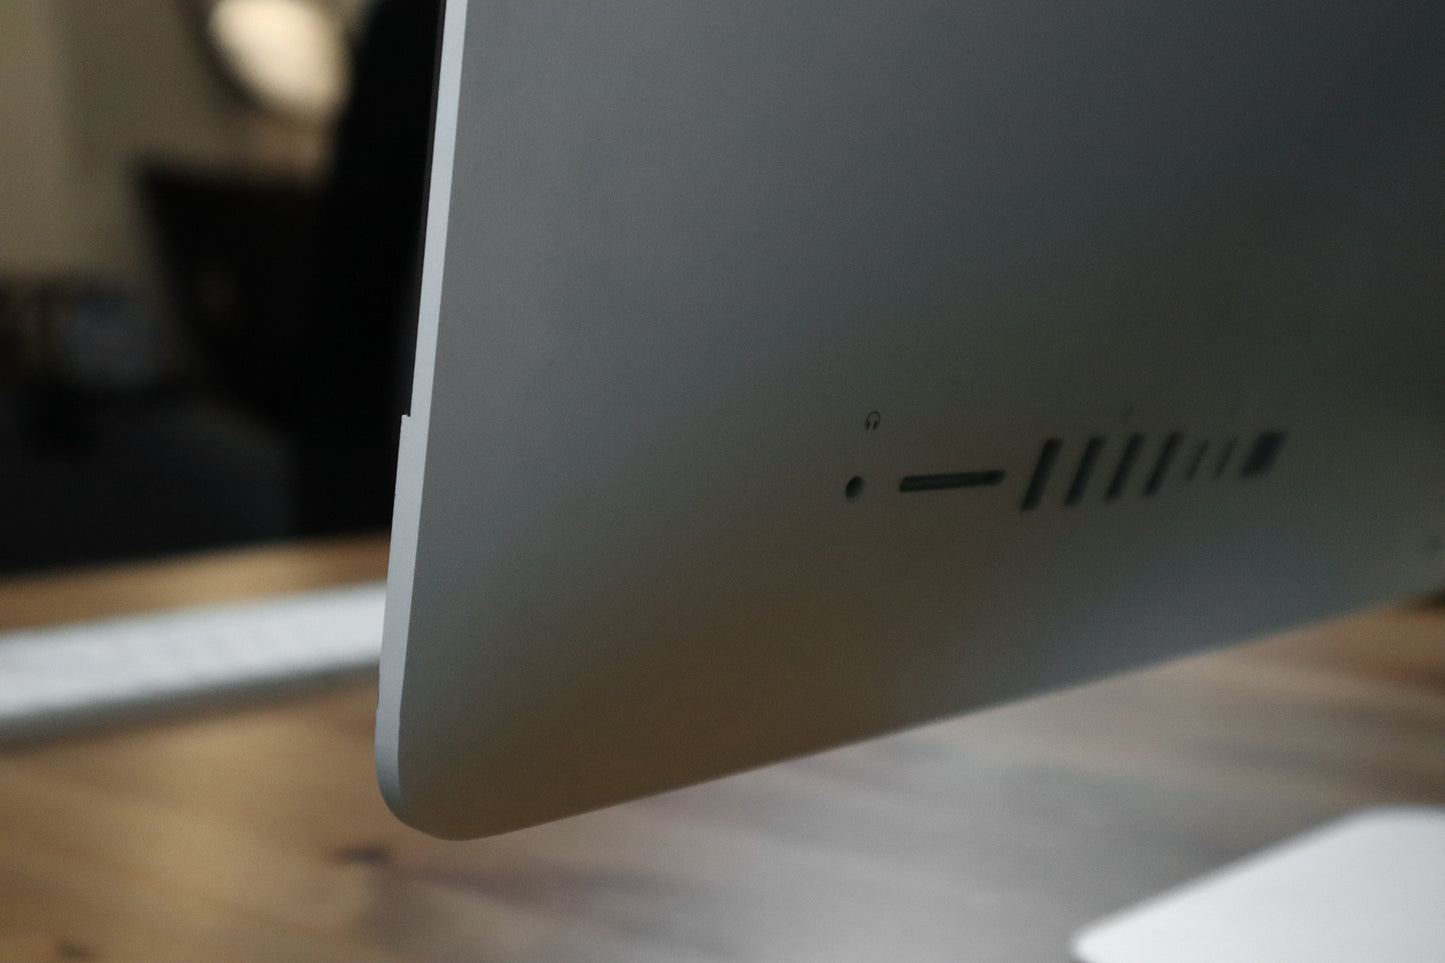 Used Apple iMac Retina 5K 27-inch (2017)